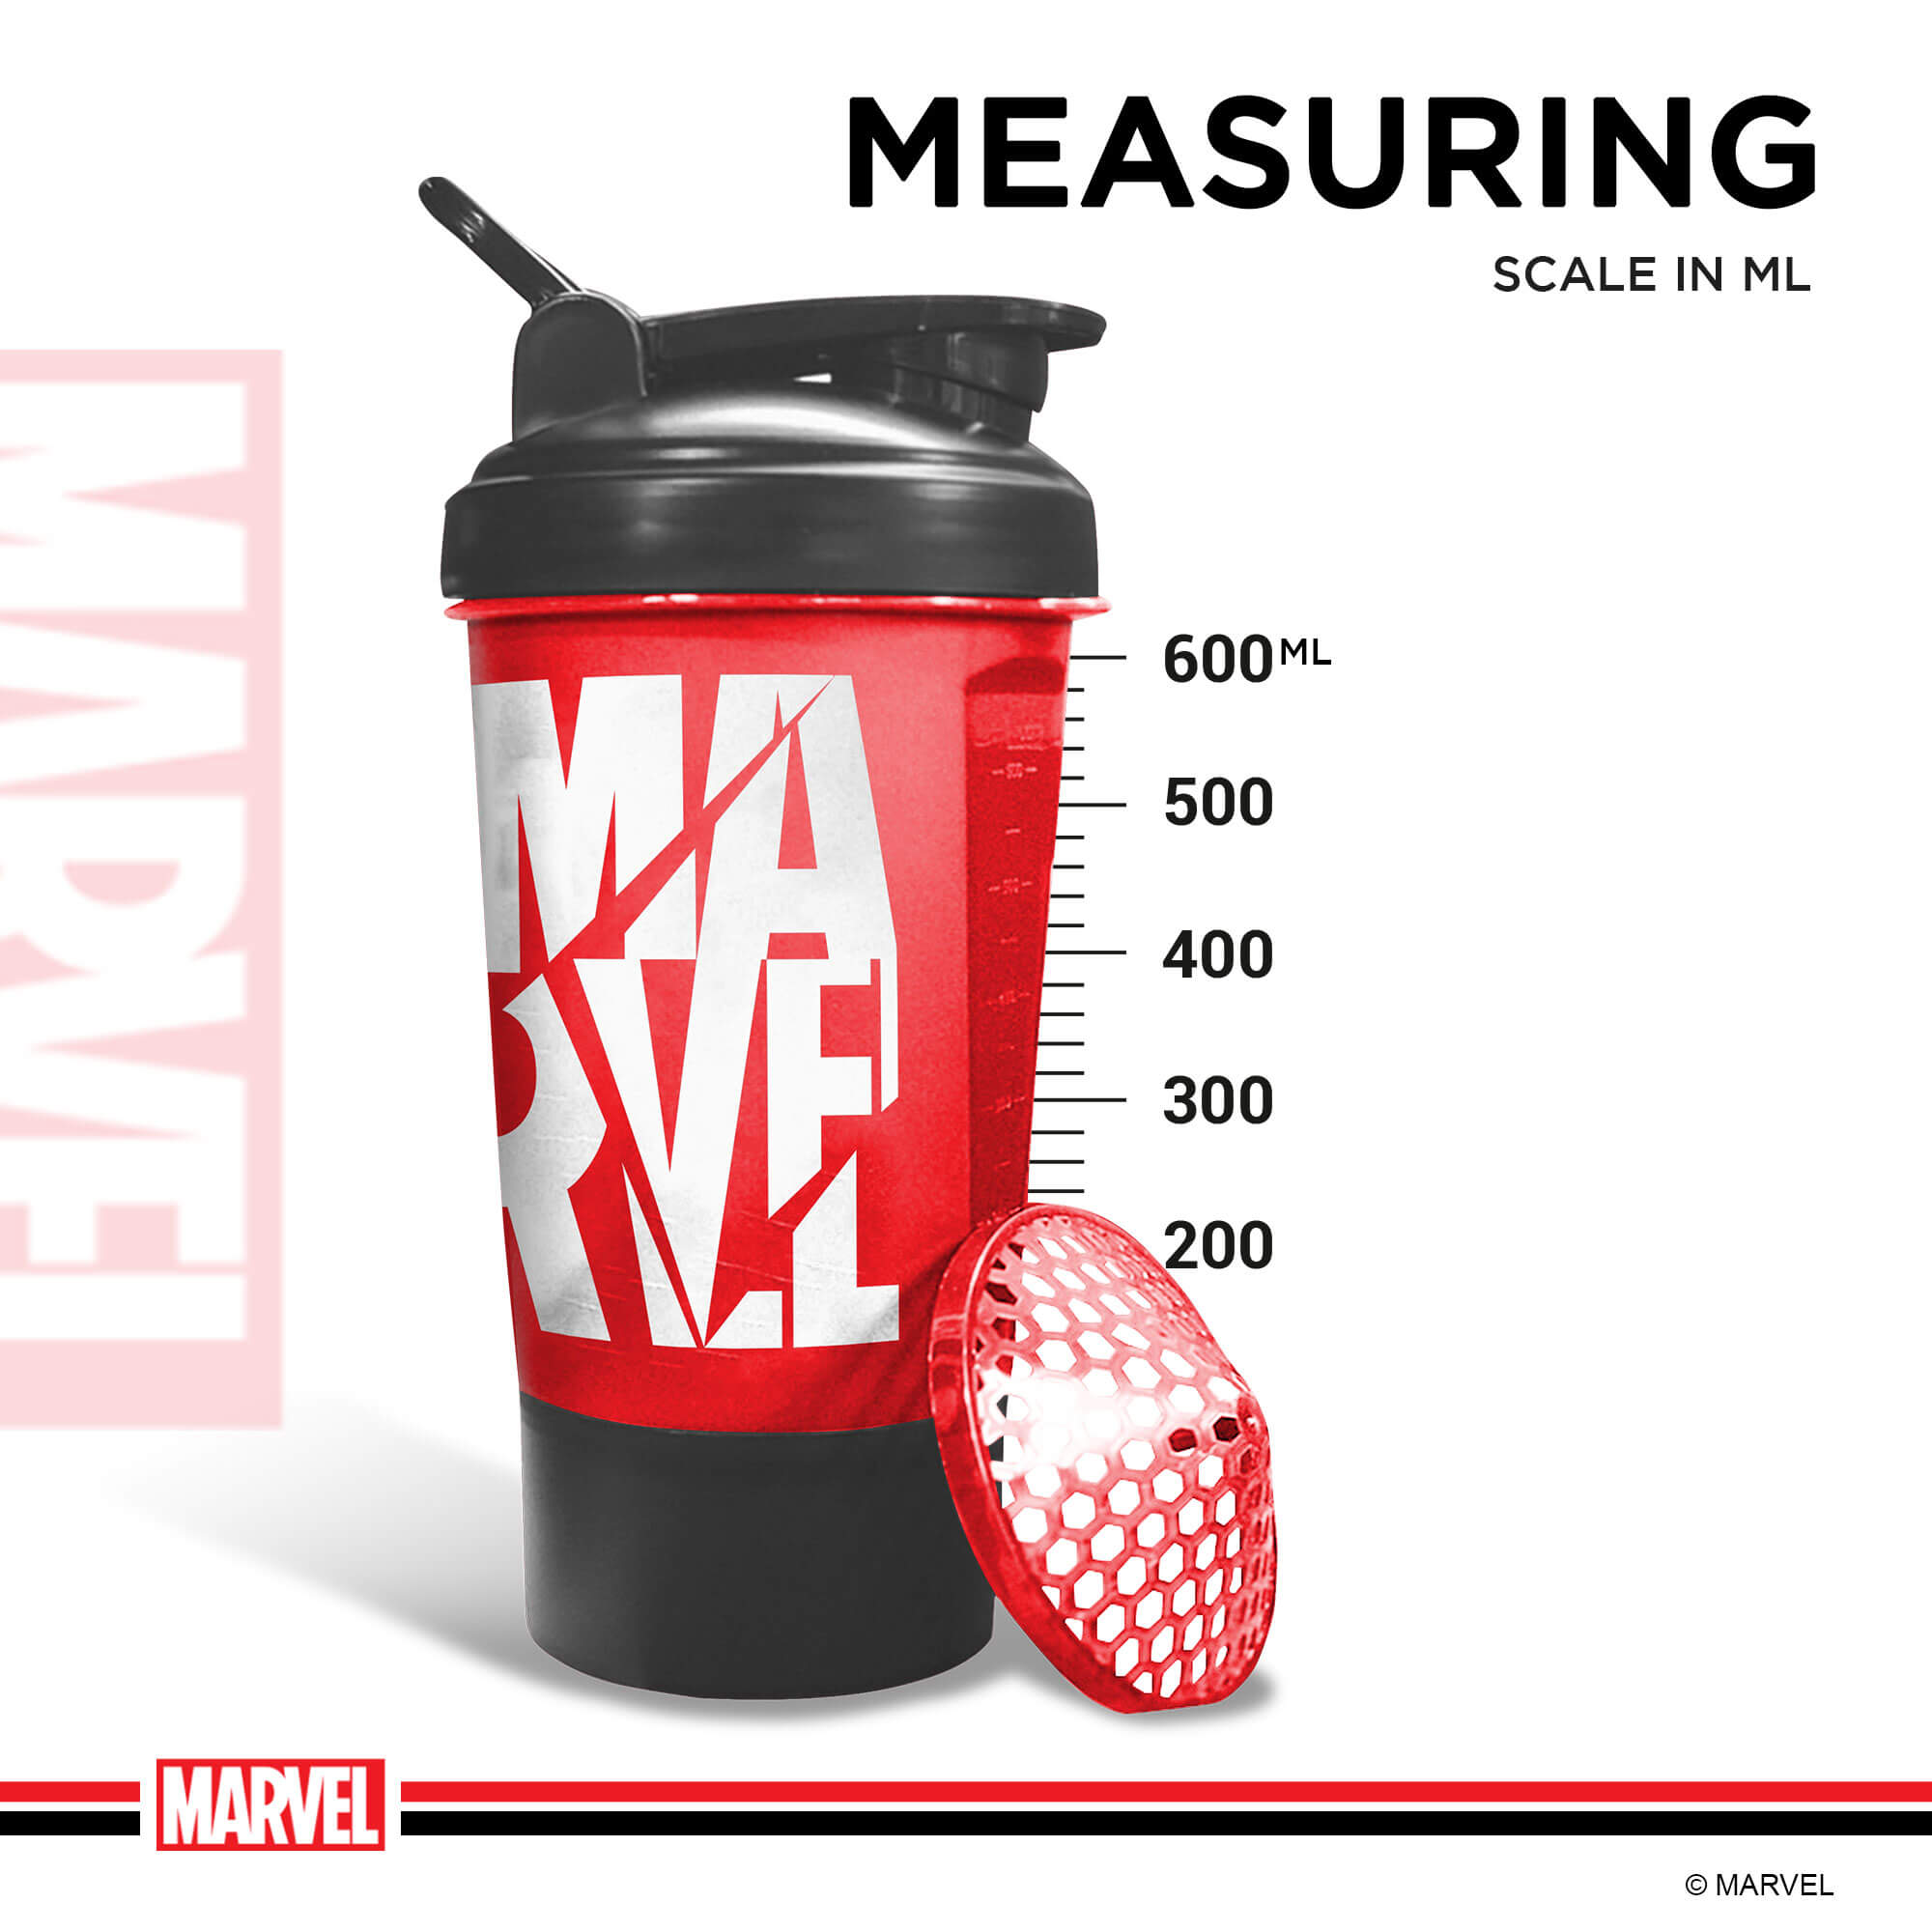 PowerMax x Marvel MSB-6S-M-RED (600ml) Marvel Protein Shaker Bottle with Single Storage